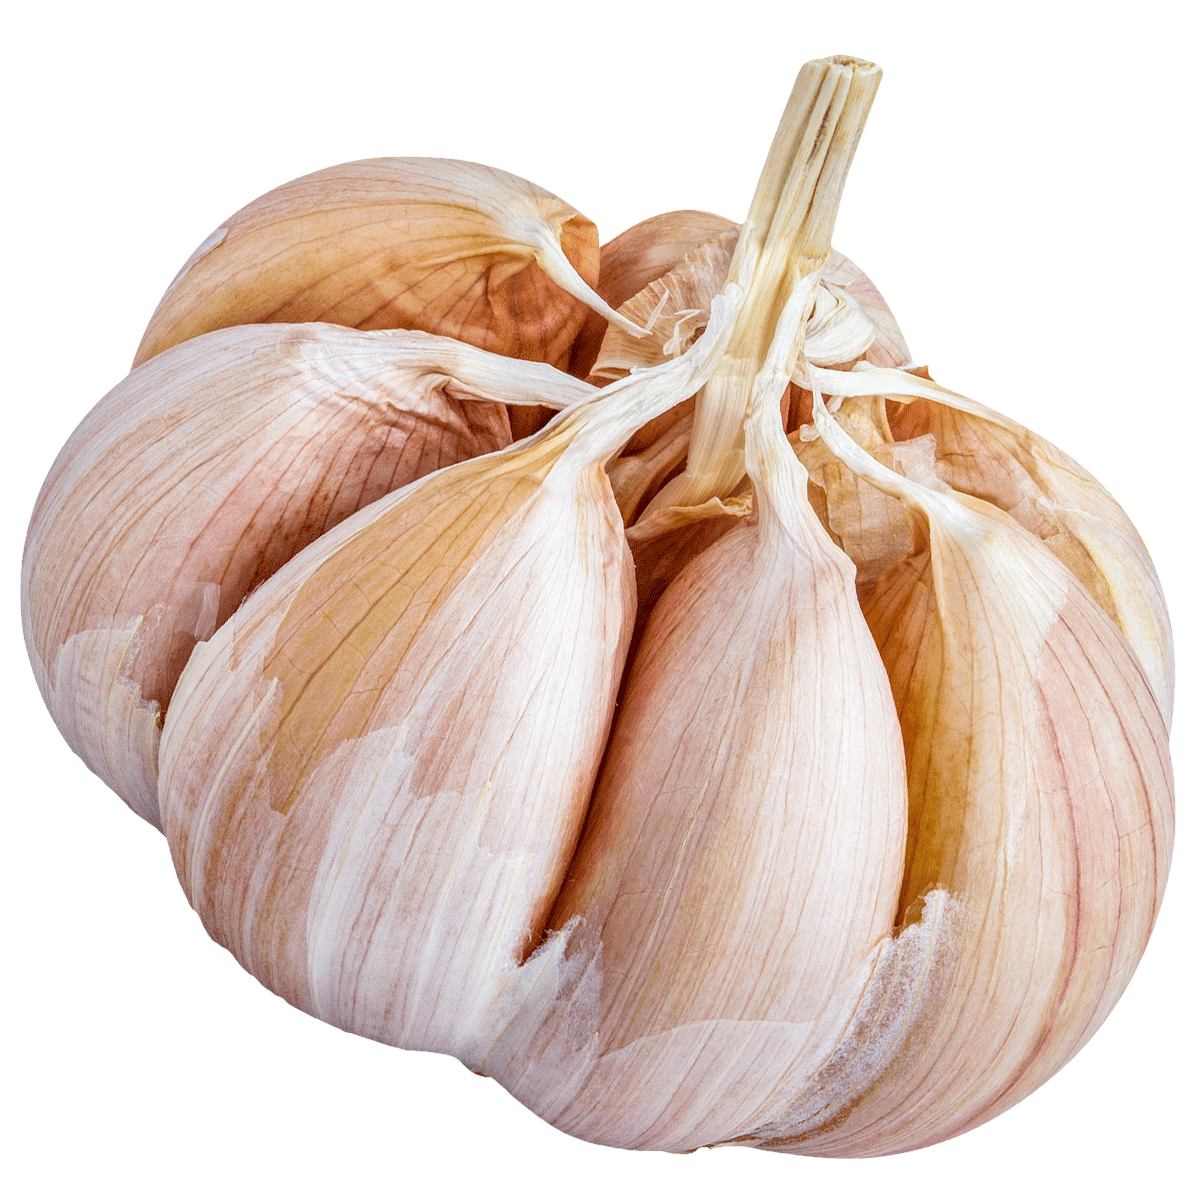 Whole garlic 